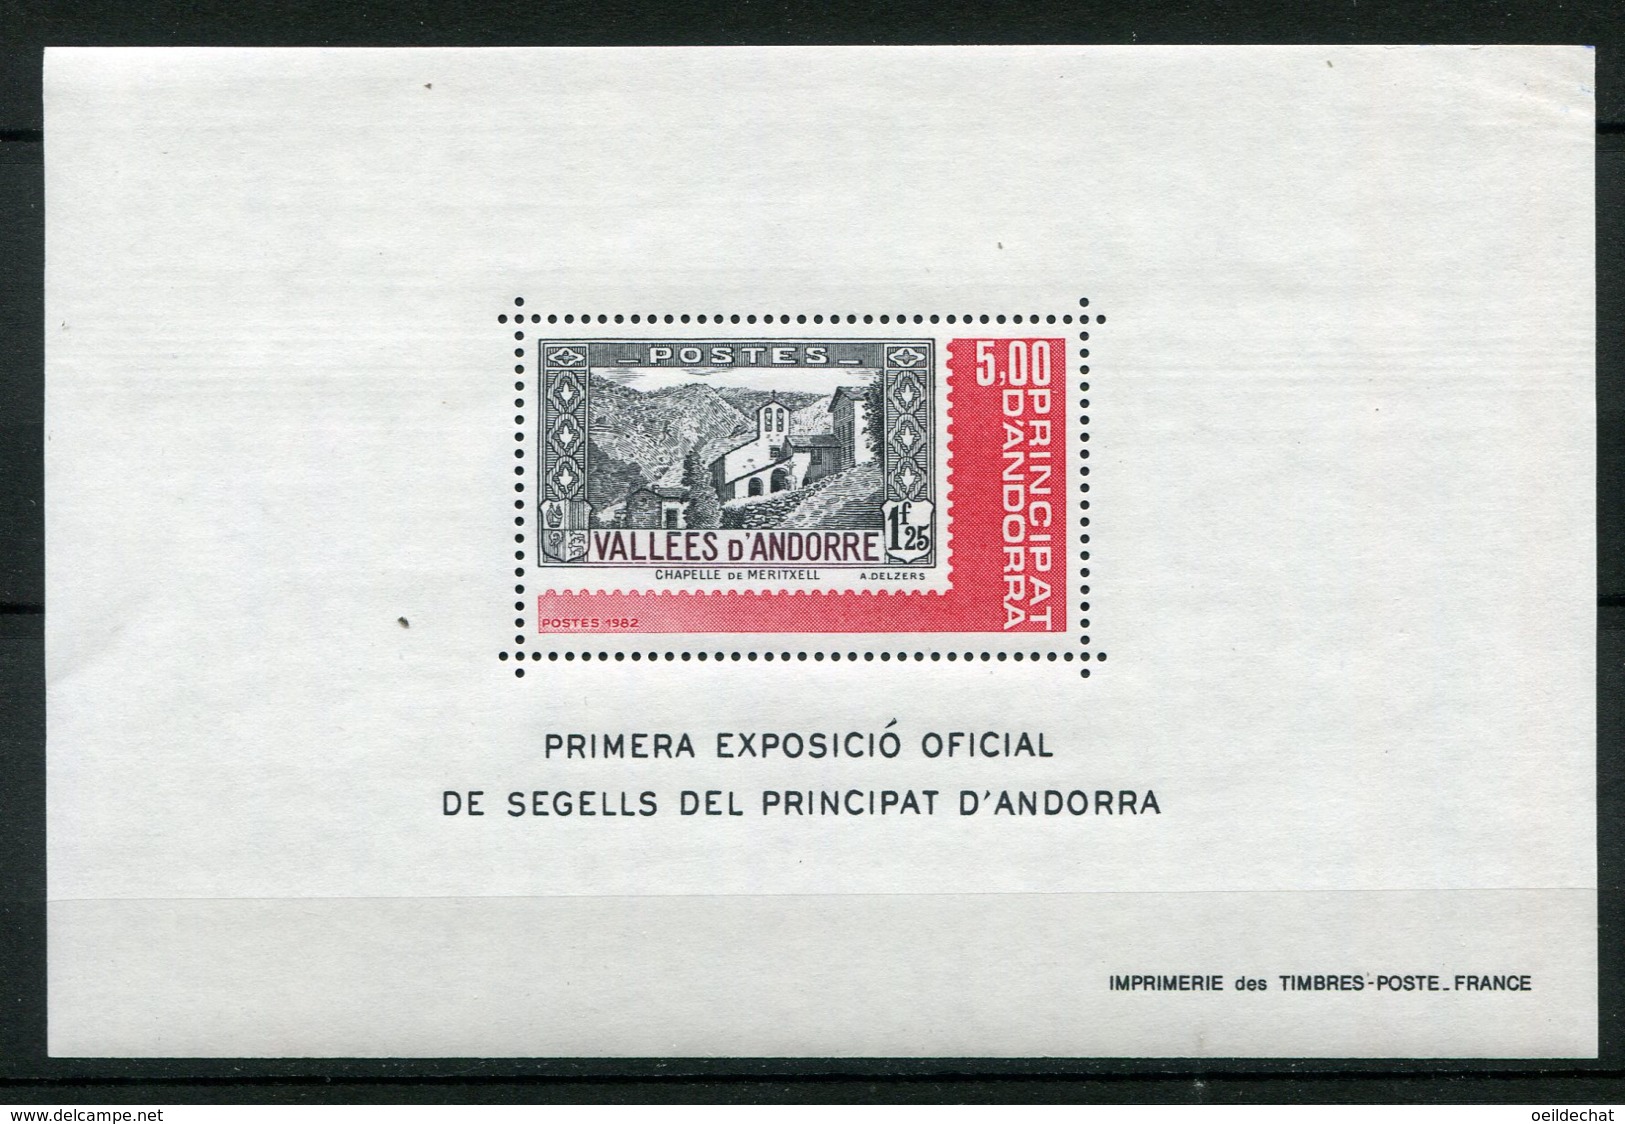 11804  ANDORRE BF 1** 5F  1er Expo Officielle Des Timbres-poste Andorrans  1982  TTB - Hojas Bloque